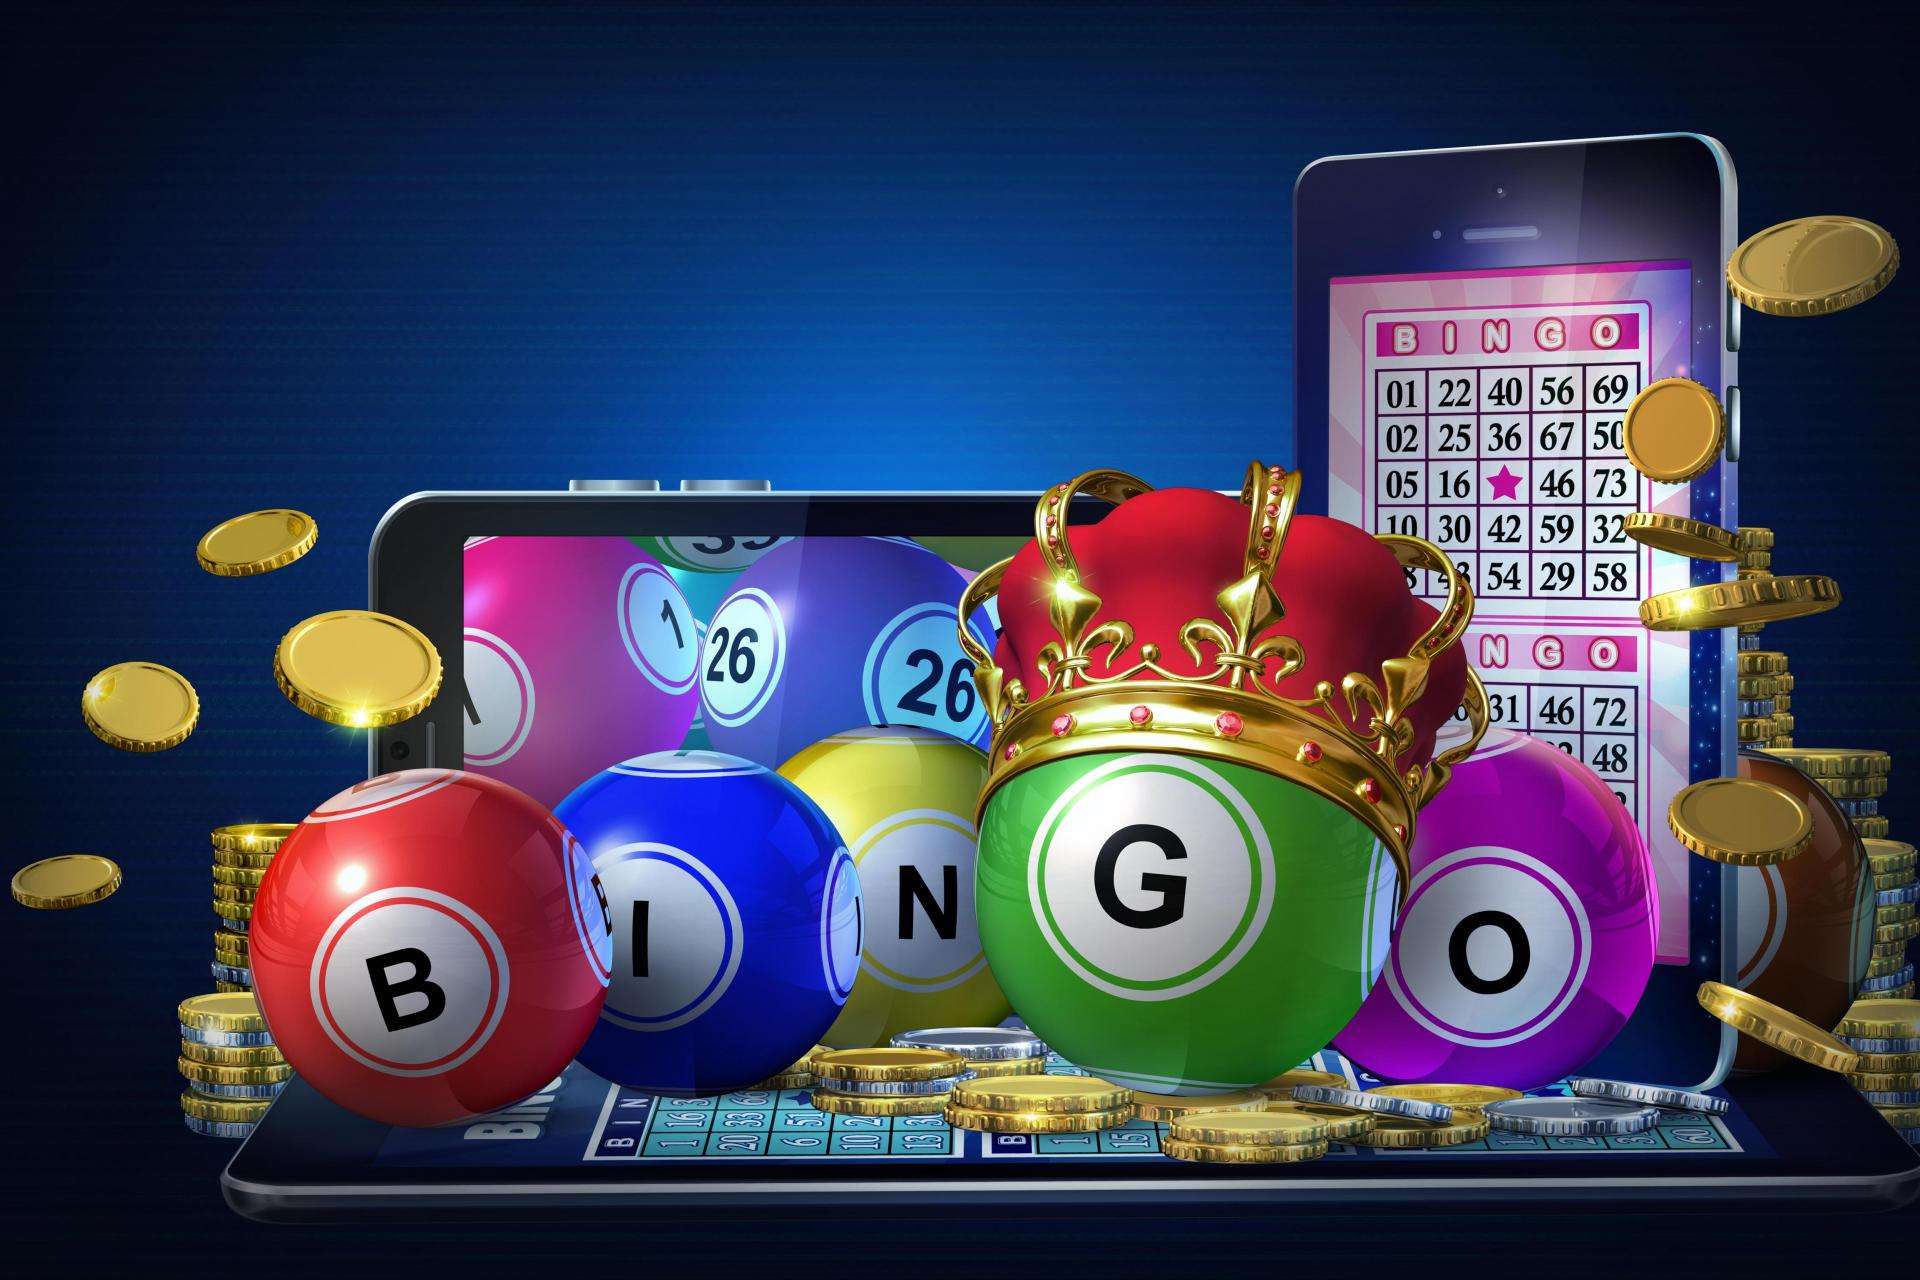 How To Get The Highest Score On Bingo Clash